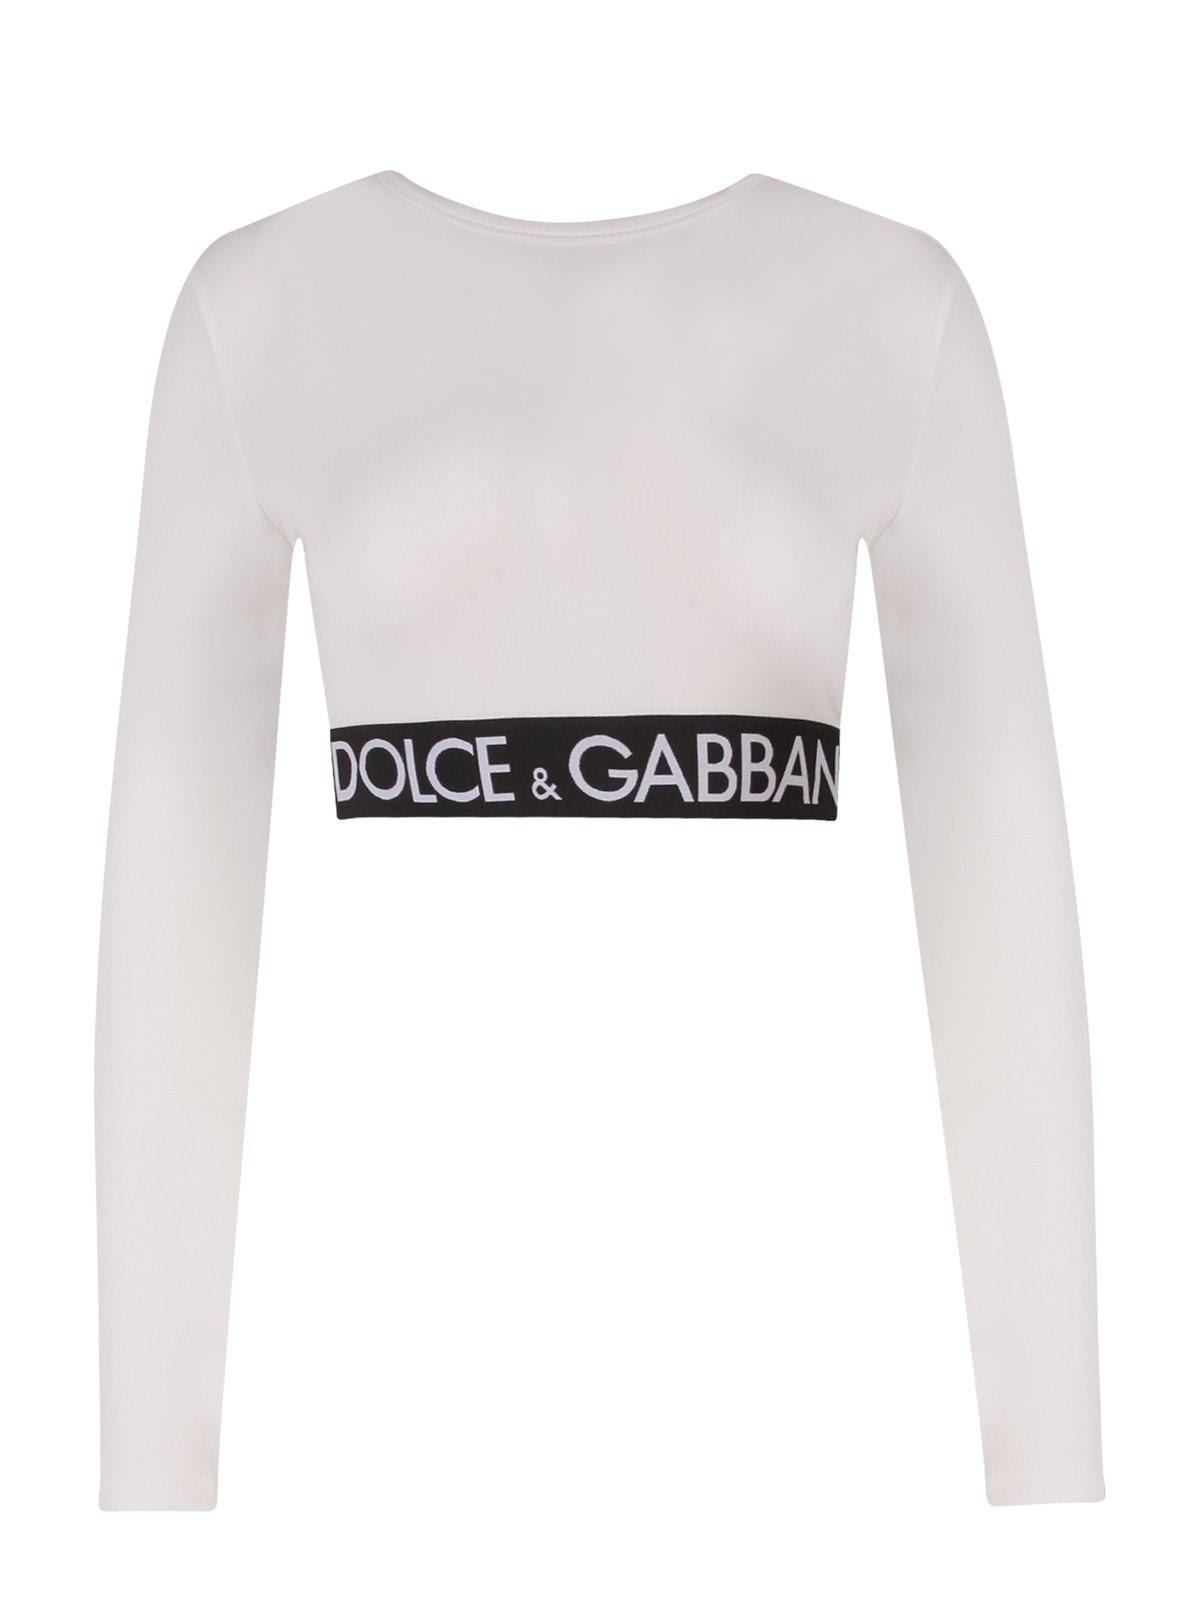 dolce & gabbana logo printed round neck jersey top